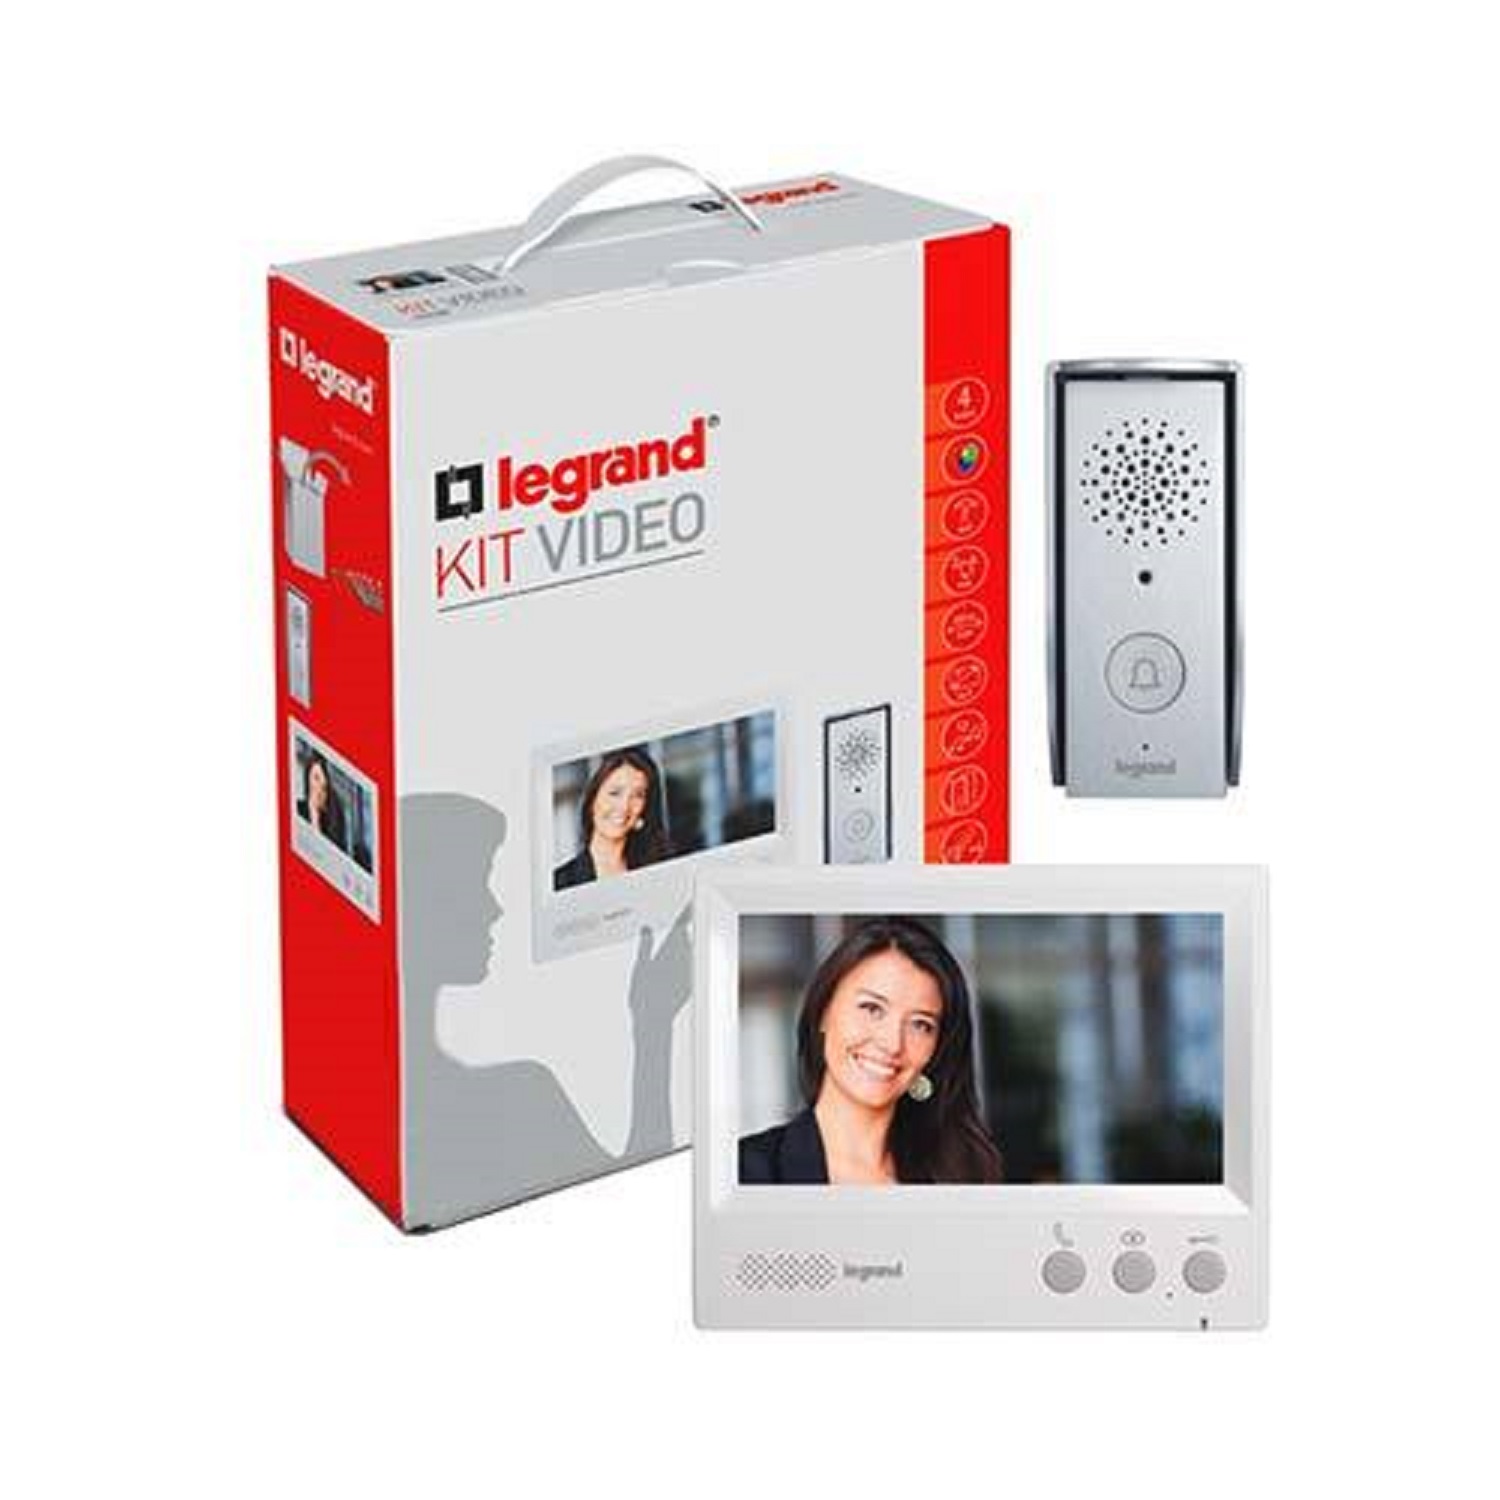 Legrand Video DoorBell with Smart LCD Screen